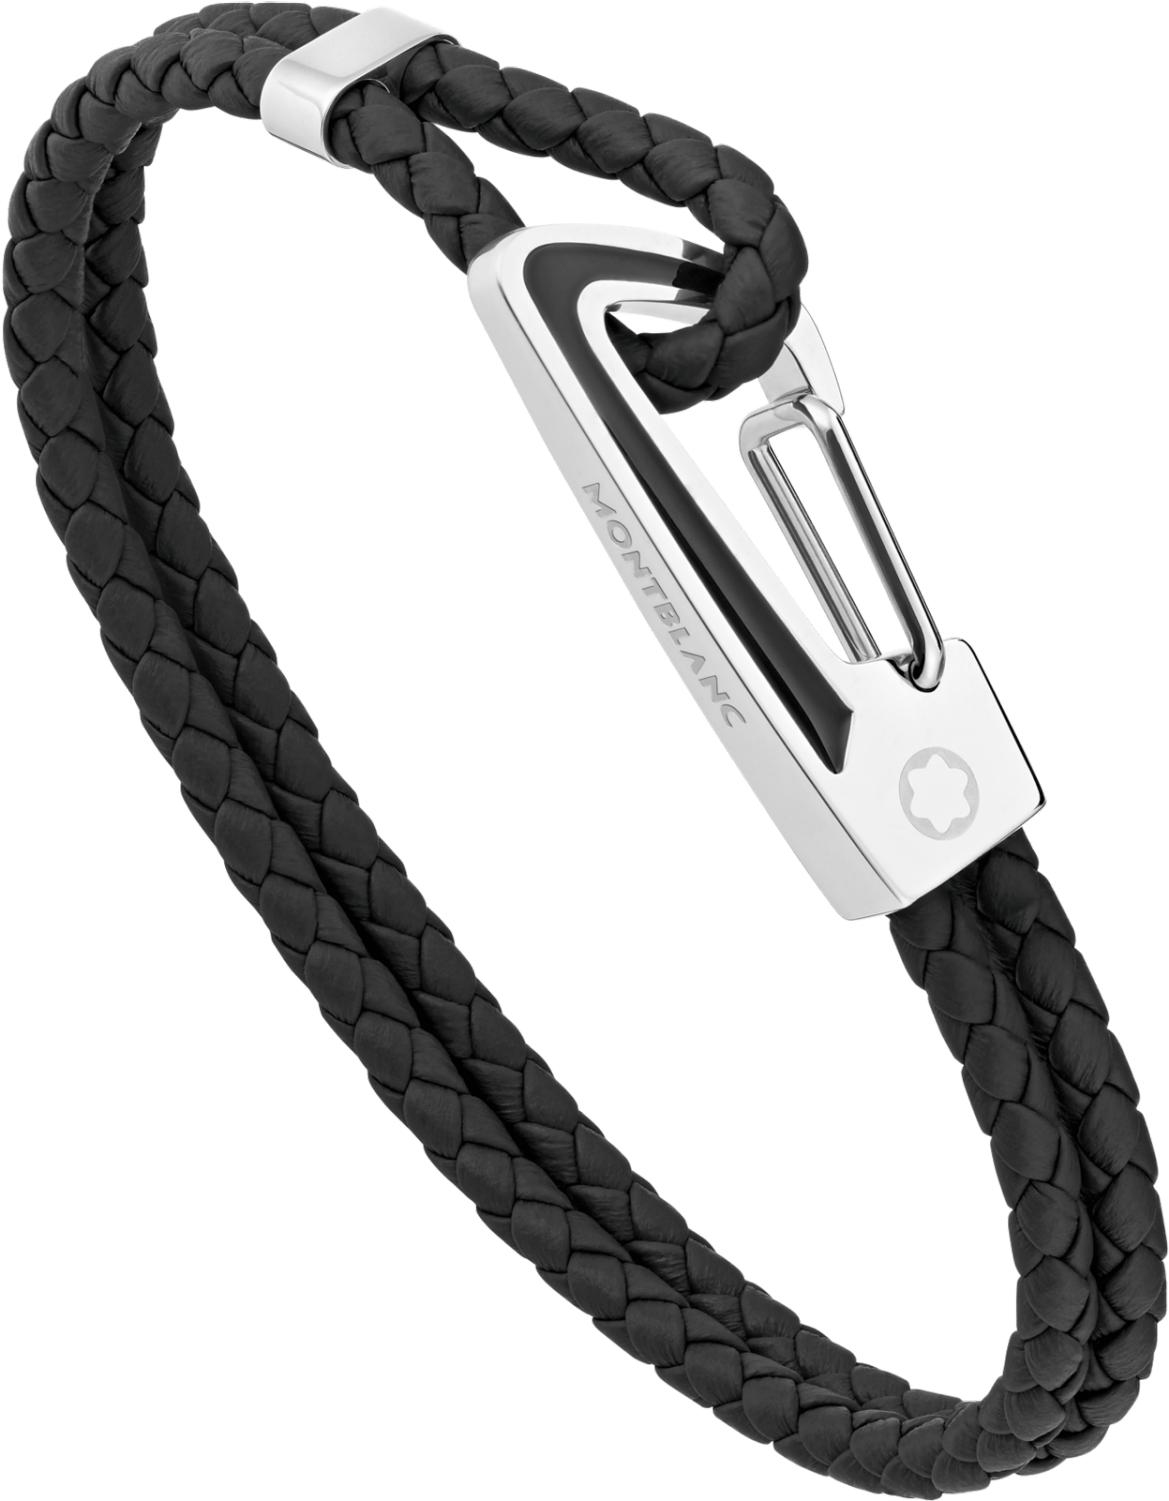 Bracelet Clip Carabiner Clipart Download - Montblanc Bracelet (1500x1500)